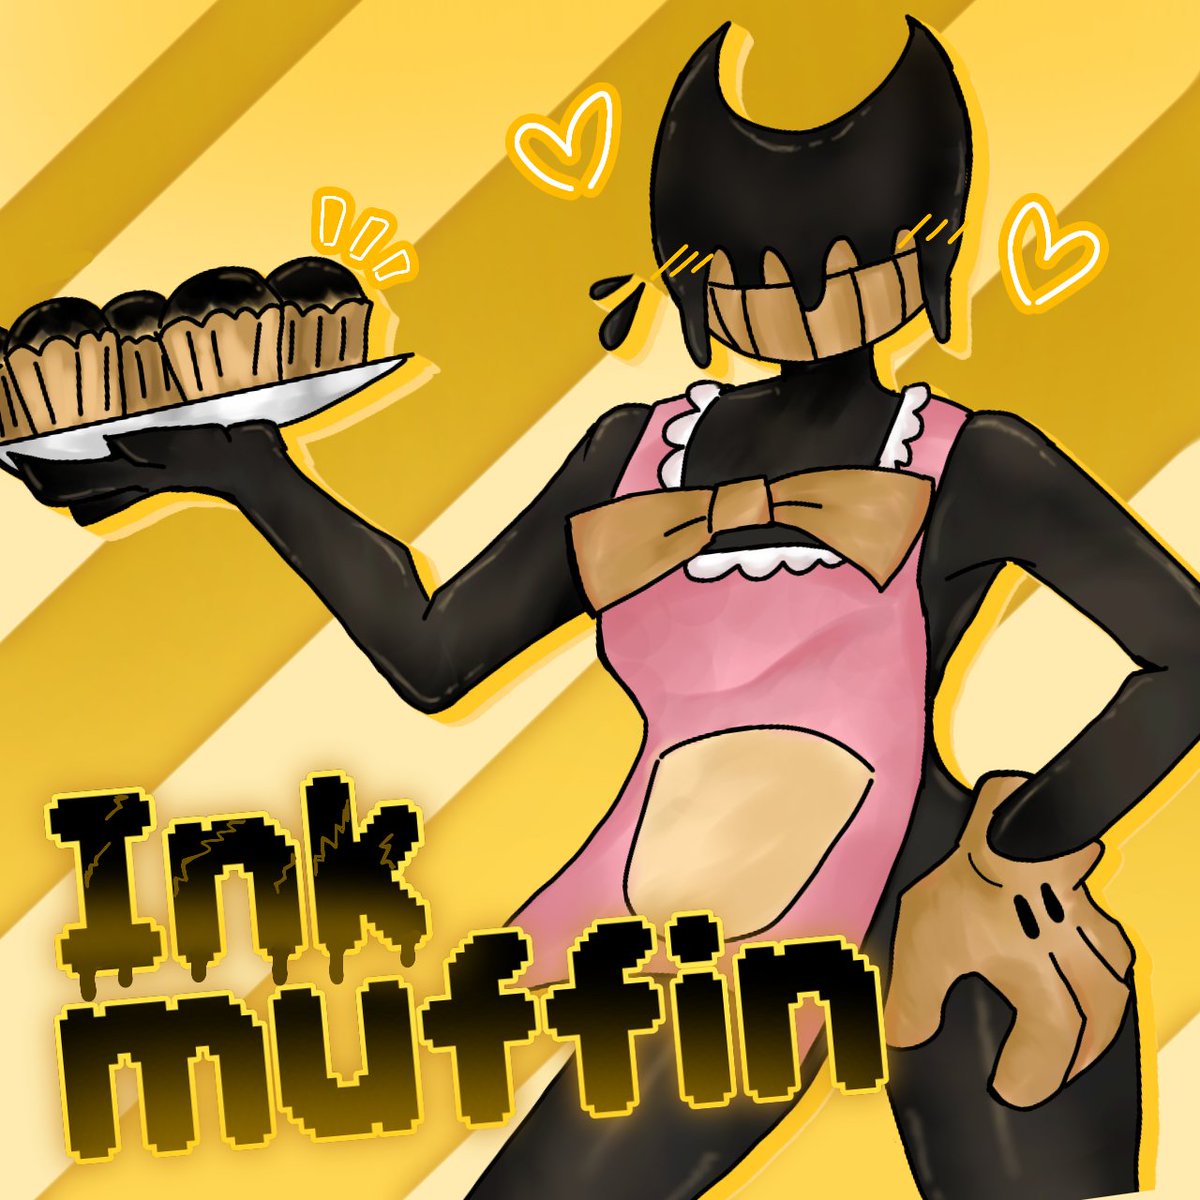 Ink muffin Give it a try! 🖤😈
#bendy #BATIM #BATDR #Indiecross #fanart #Inkdemon